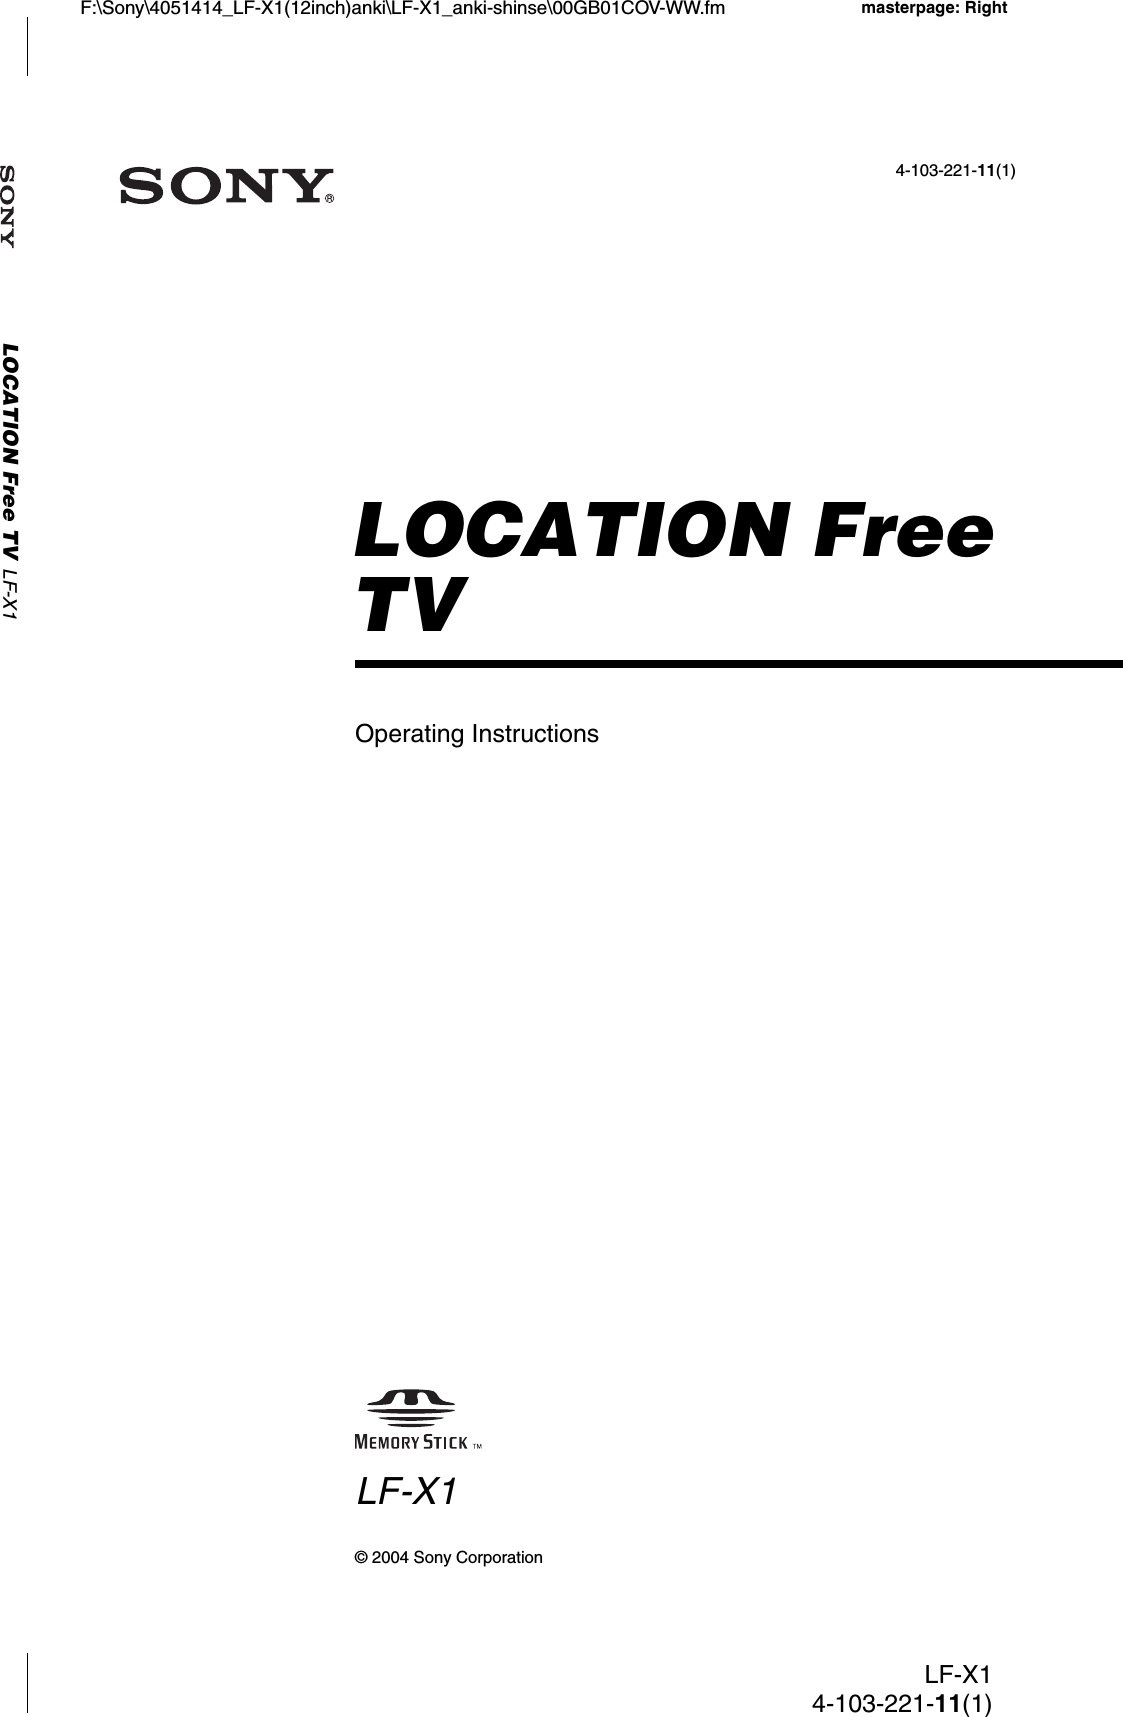 Operating Instructions4-103-221-11(1)LOCATION Free TVLF-X1© 2004 Sony CorporationLOCATION Free TV LF-X1F:\Sony\4051414_LF-X1(12inch)anki\LF-X1_anki-shinse\00GB01COV-WW.fm masterpage: RightLF-X14-103-221-11(1)